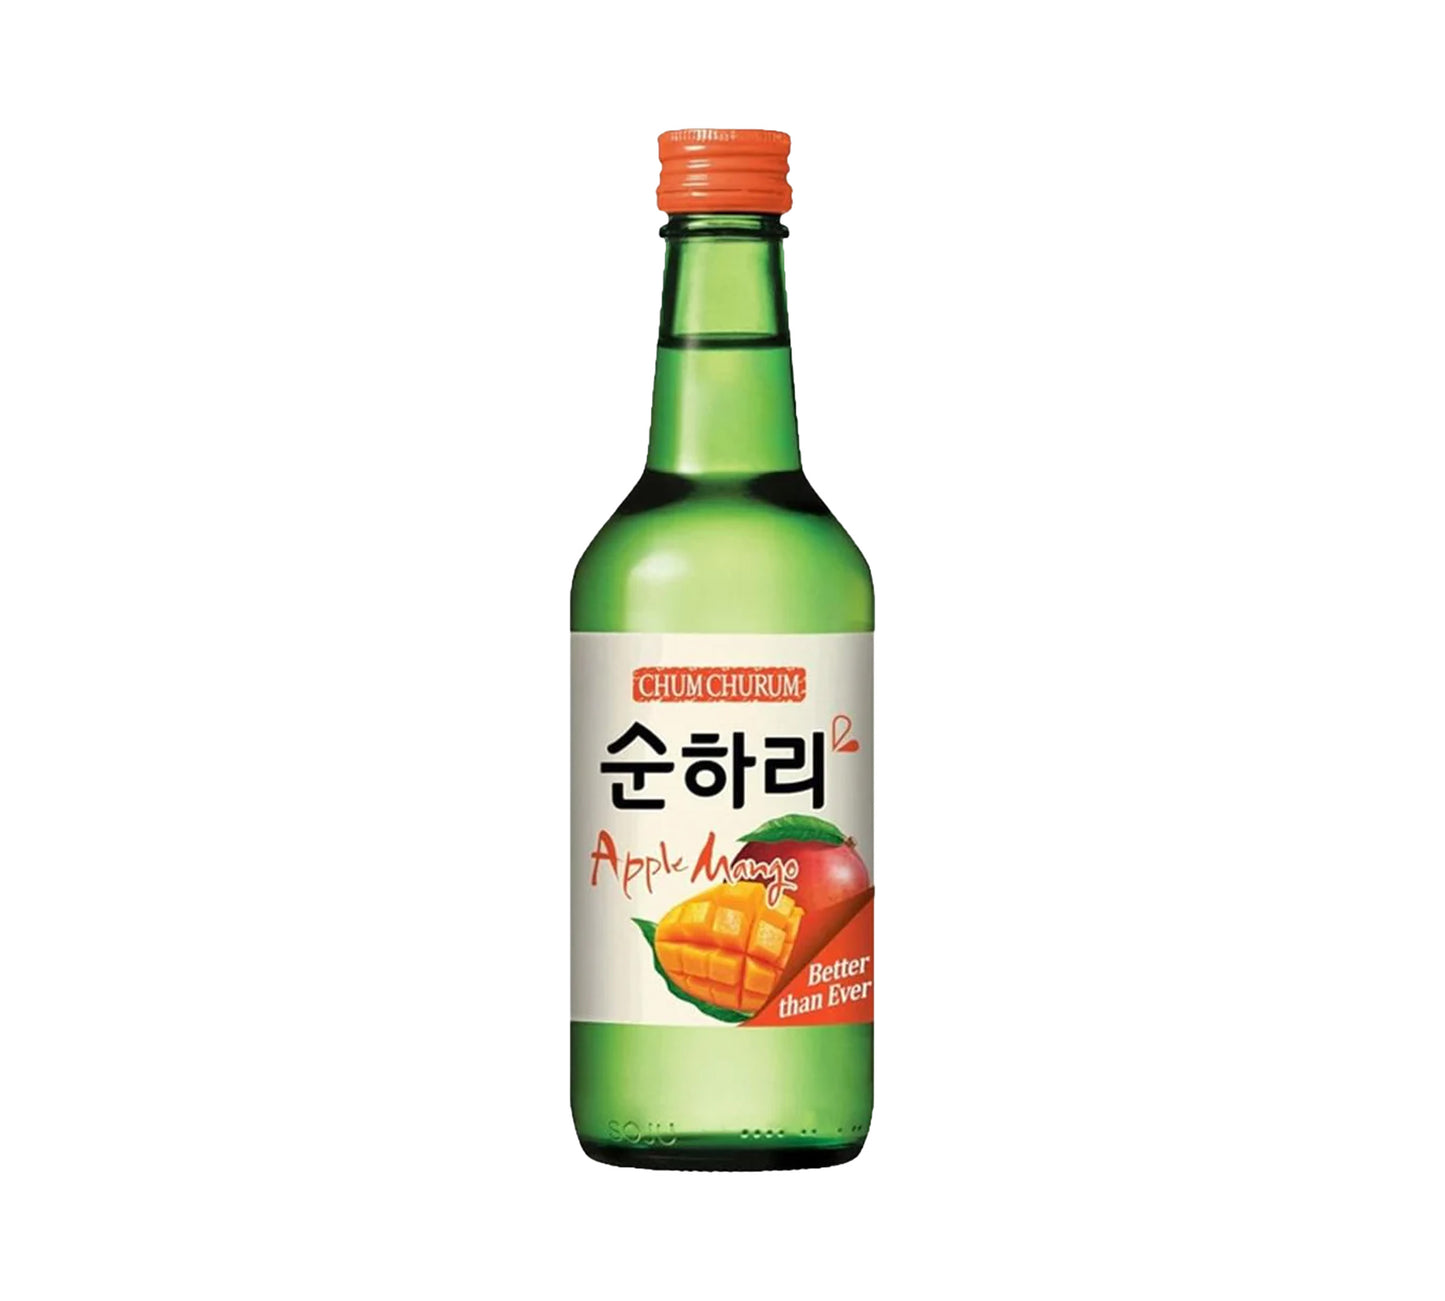 Lotte Chum Churum Soju Apple Mango Flavour 12% (360 ml)